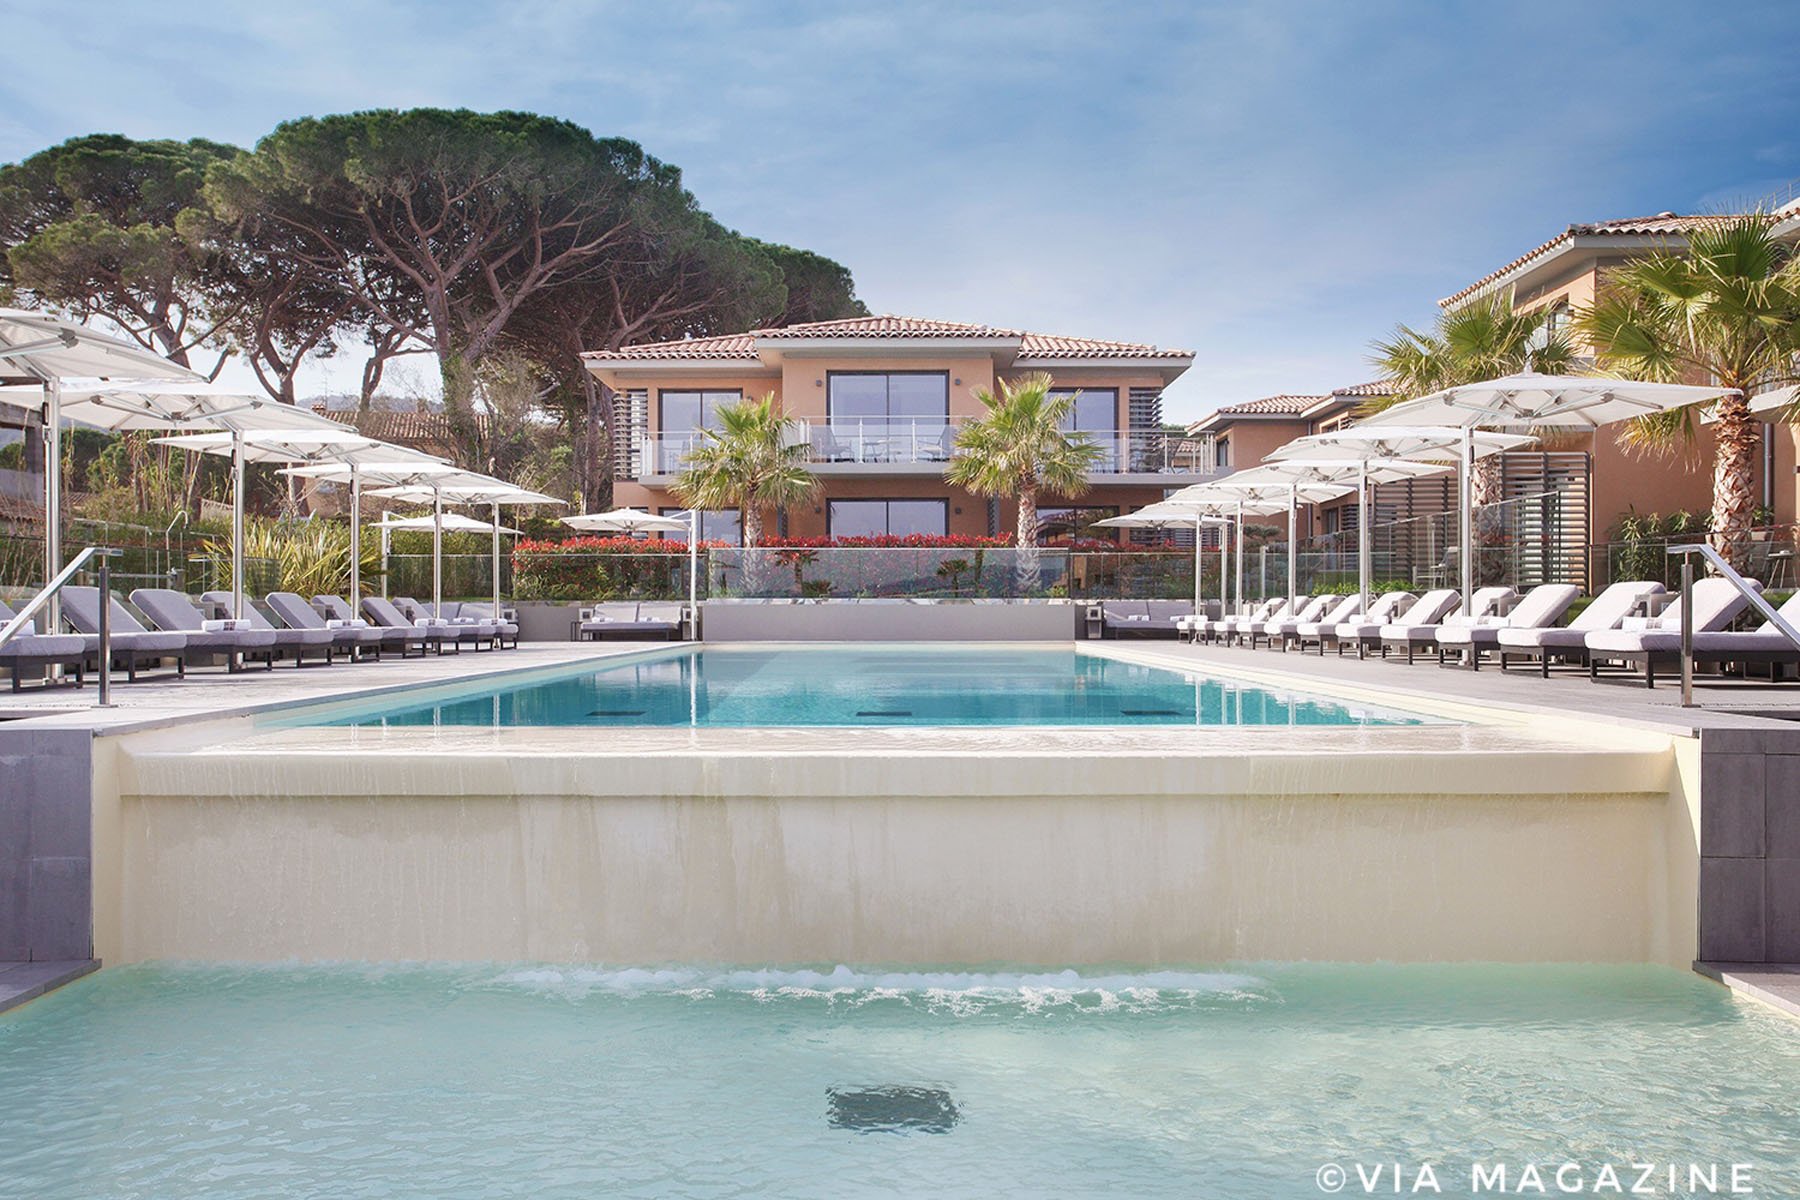 Pool view WOOD Villa Kube Hotel Saint-Tropez - French Riviera